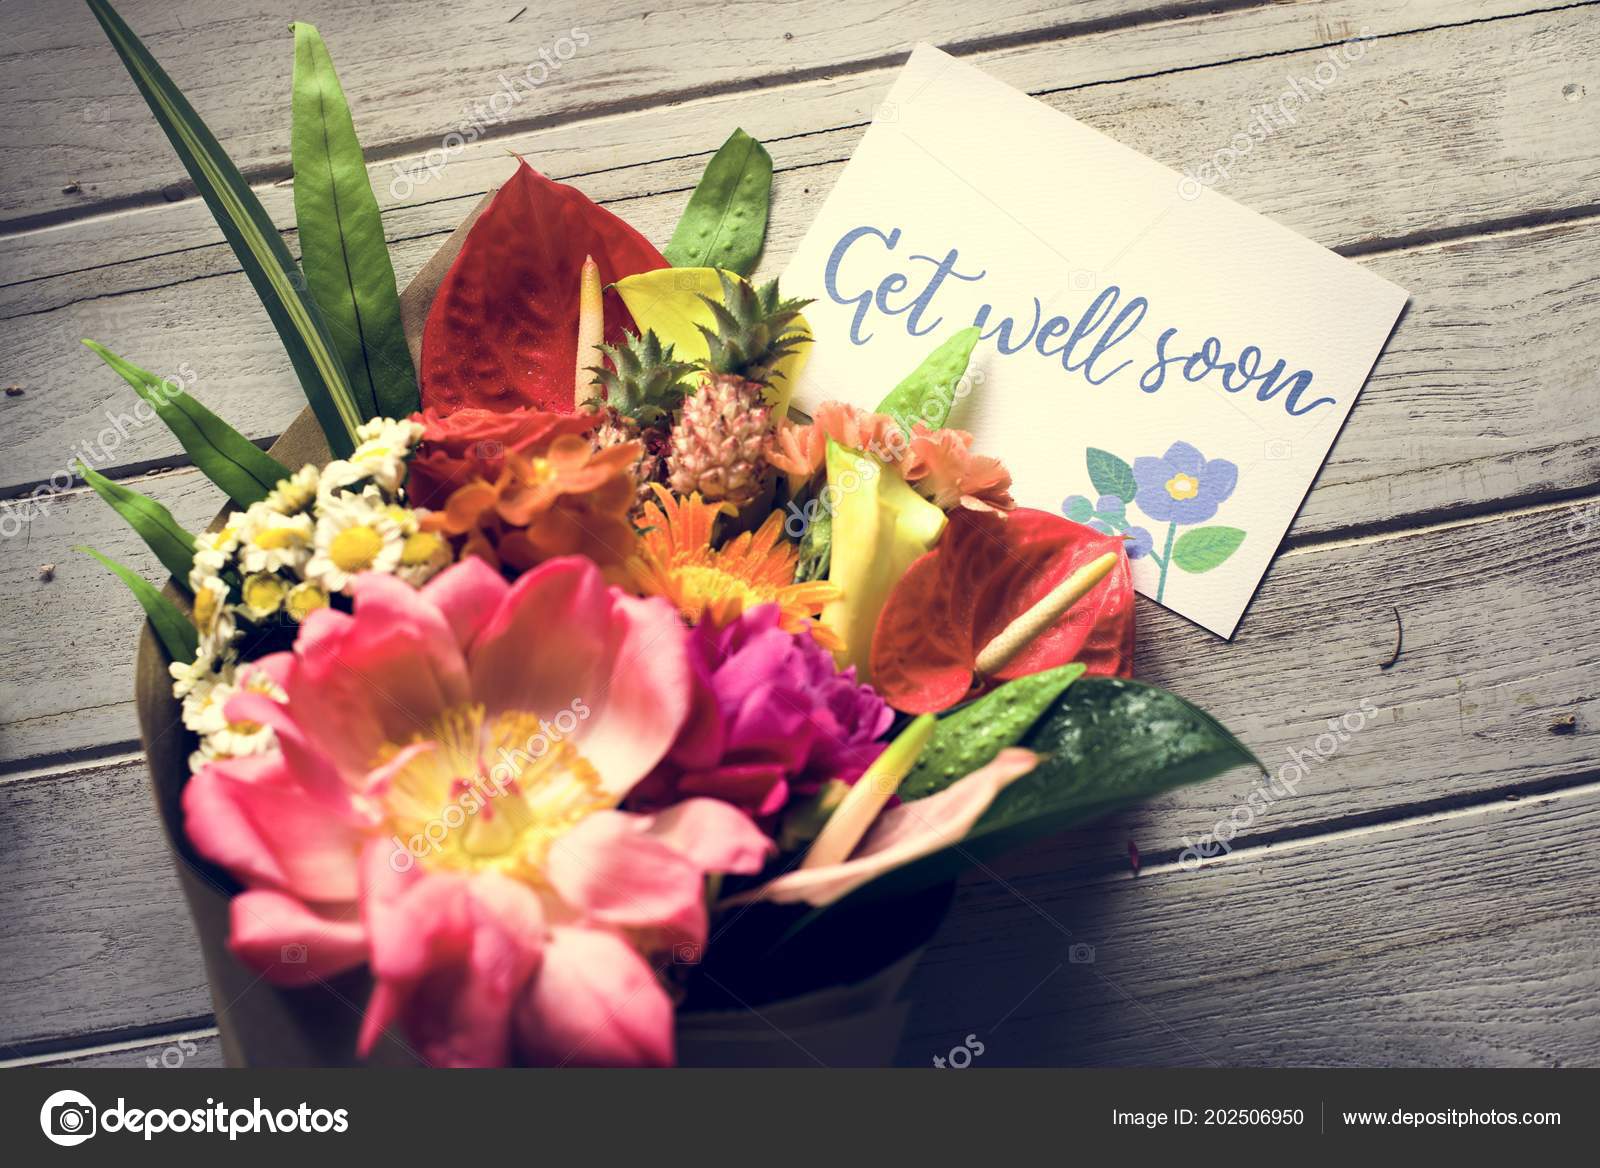 Get Well Soon Message Flowers Bouquet 